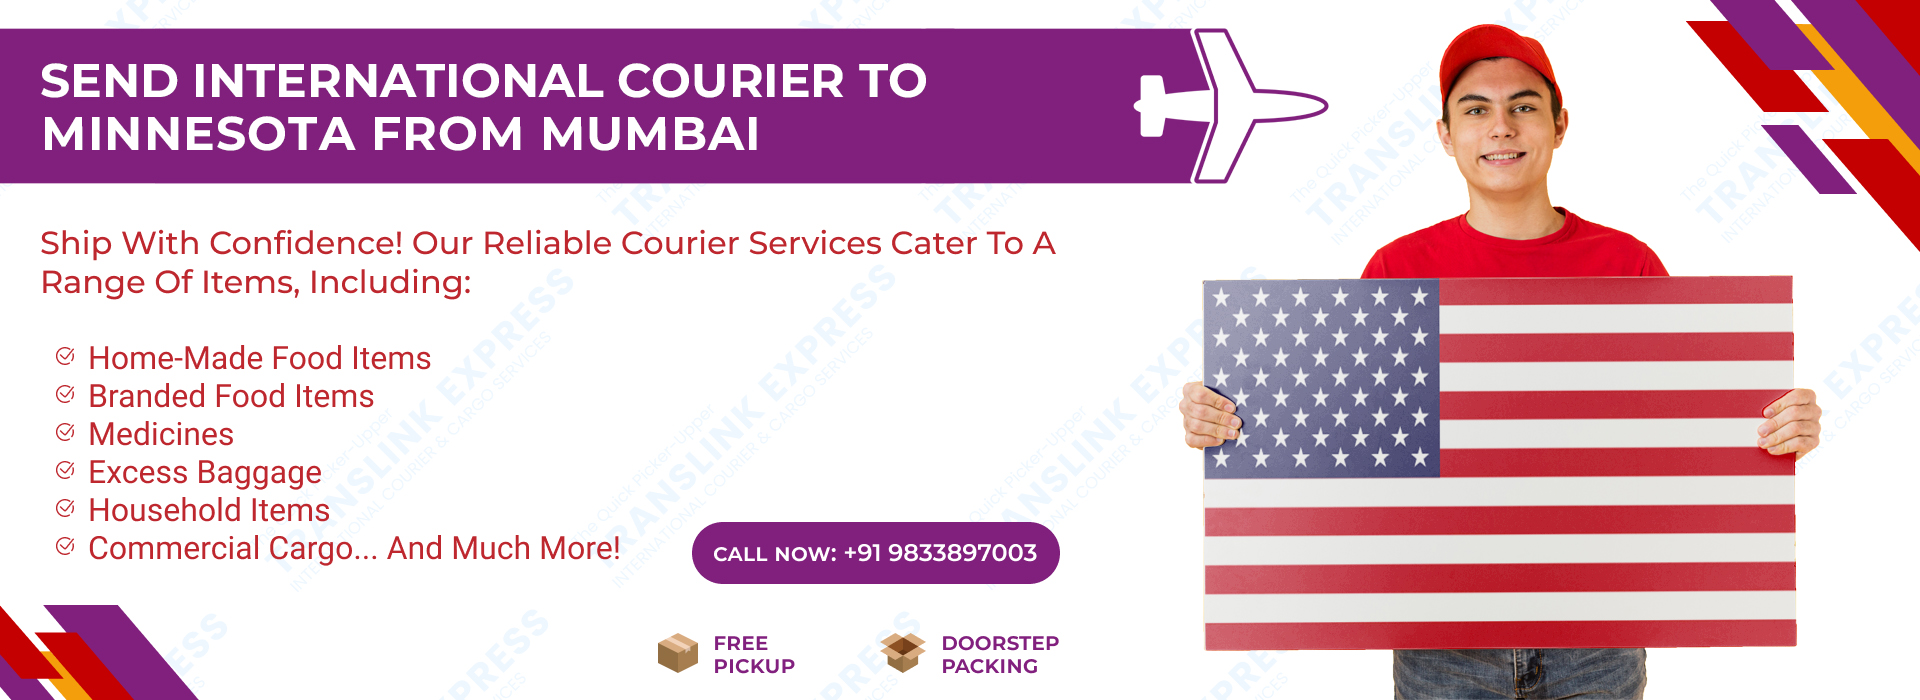 Courier to Minnesota From Mumbai